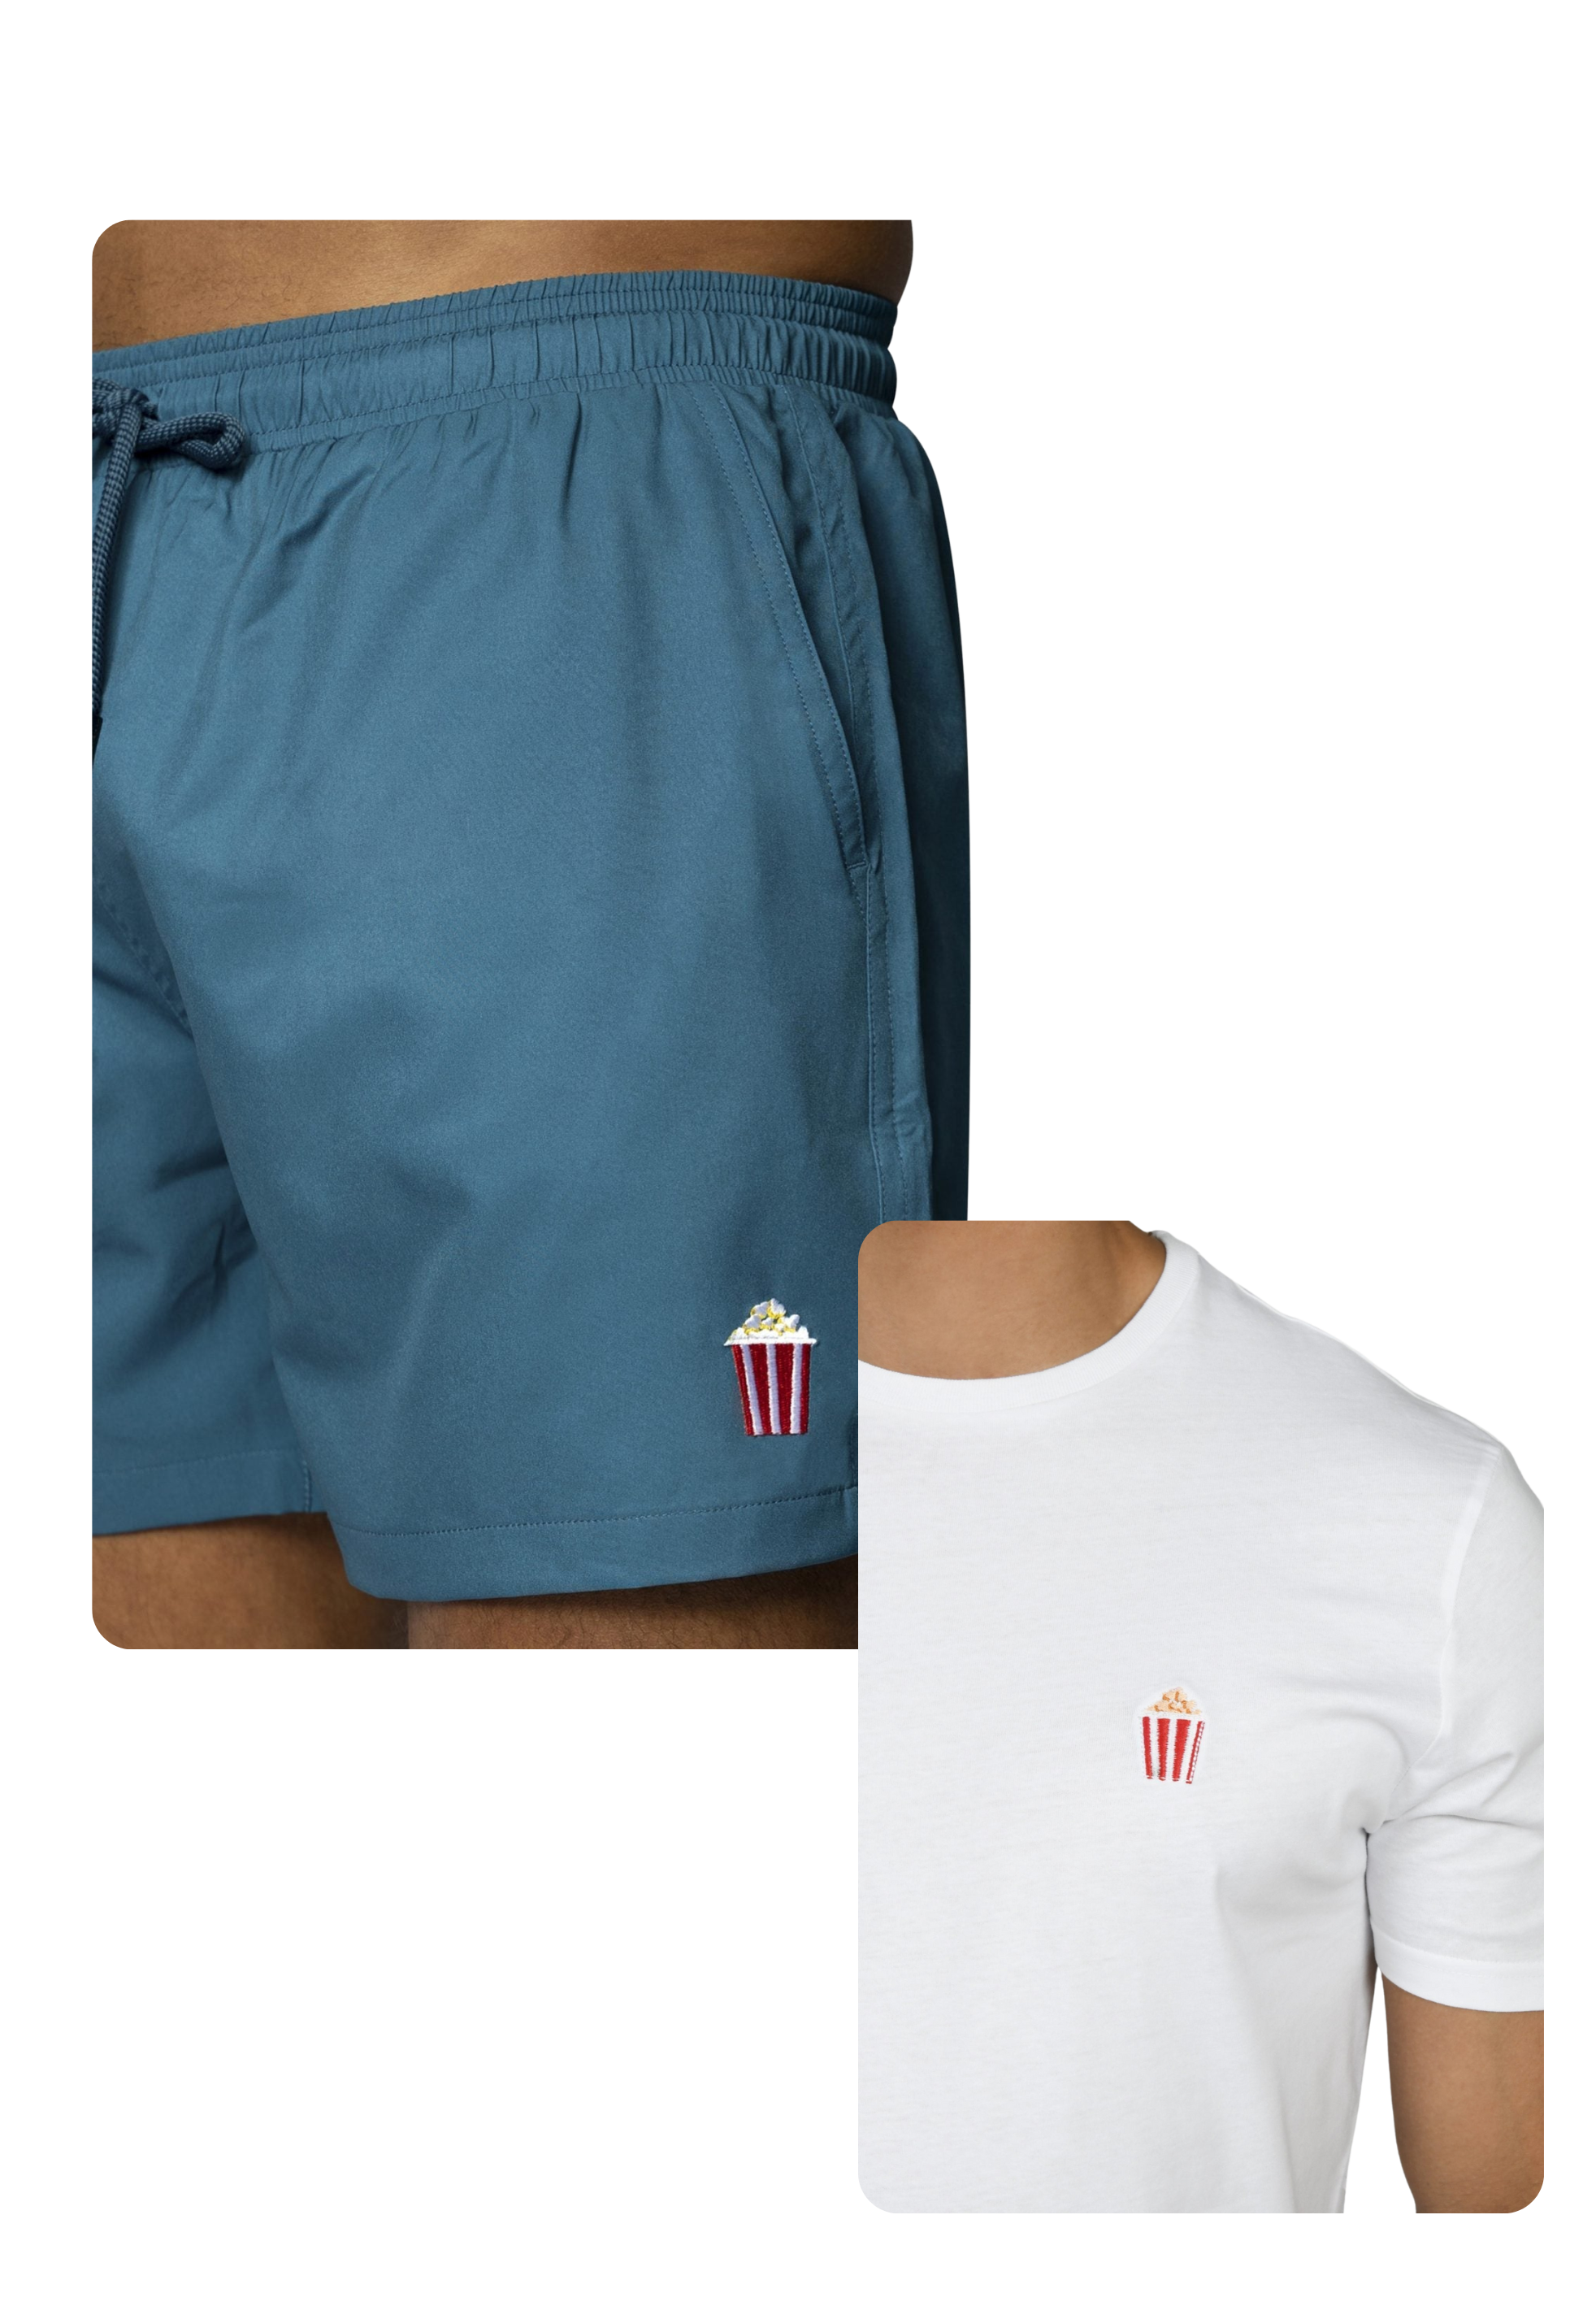 Popcorn coco Swim Trunks and T-shirt Bundle